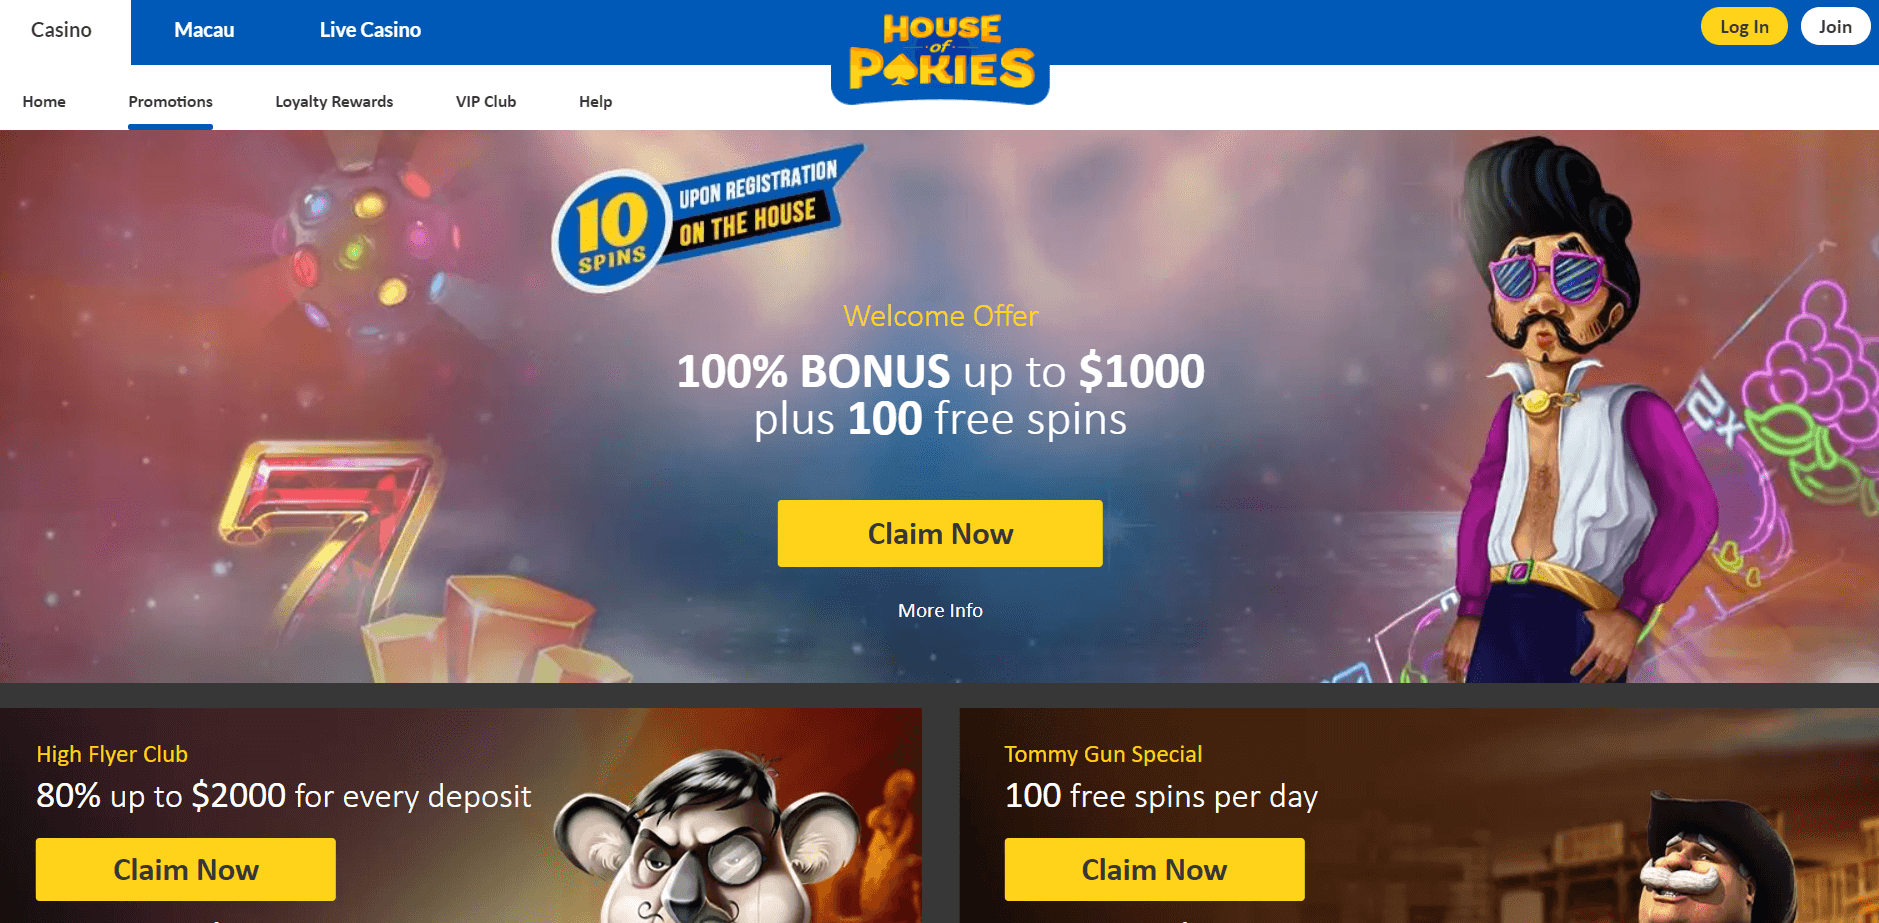 Rivers casino online sports betting